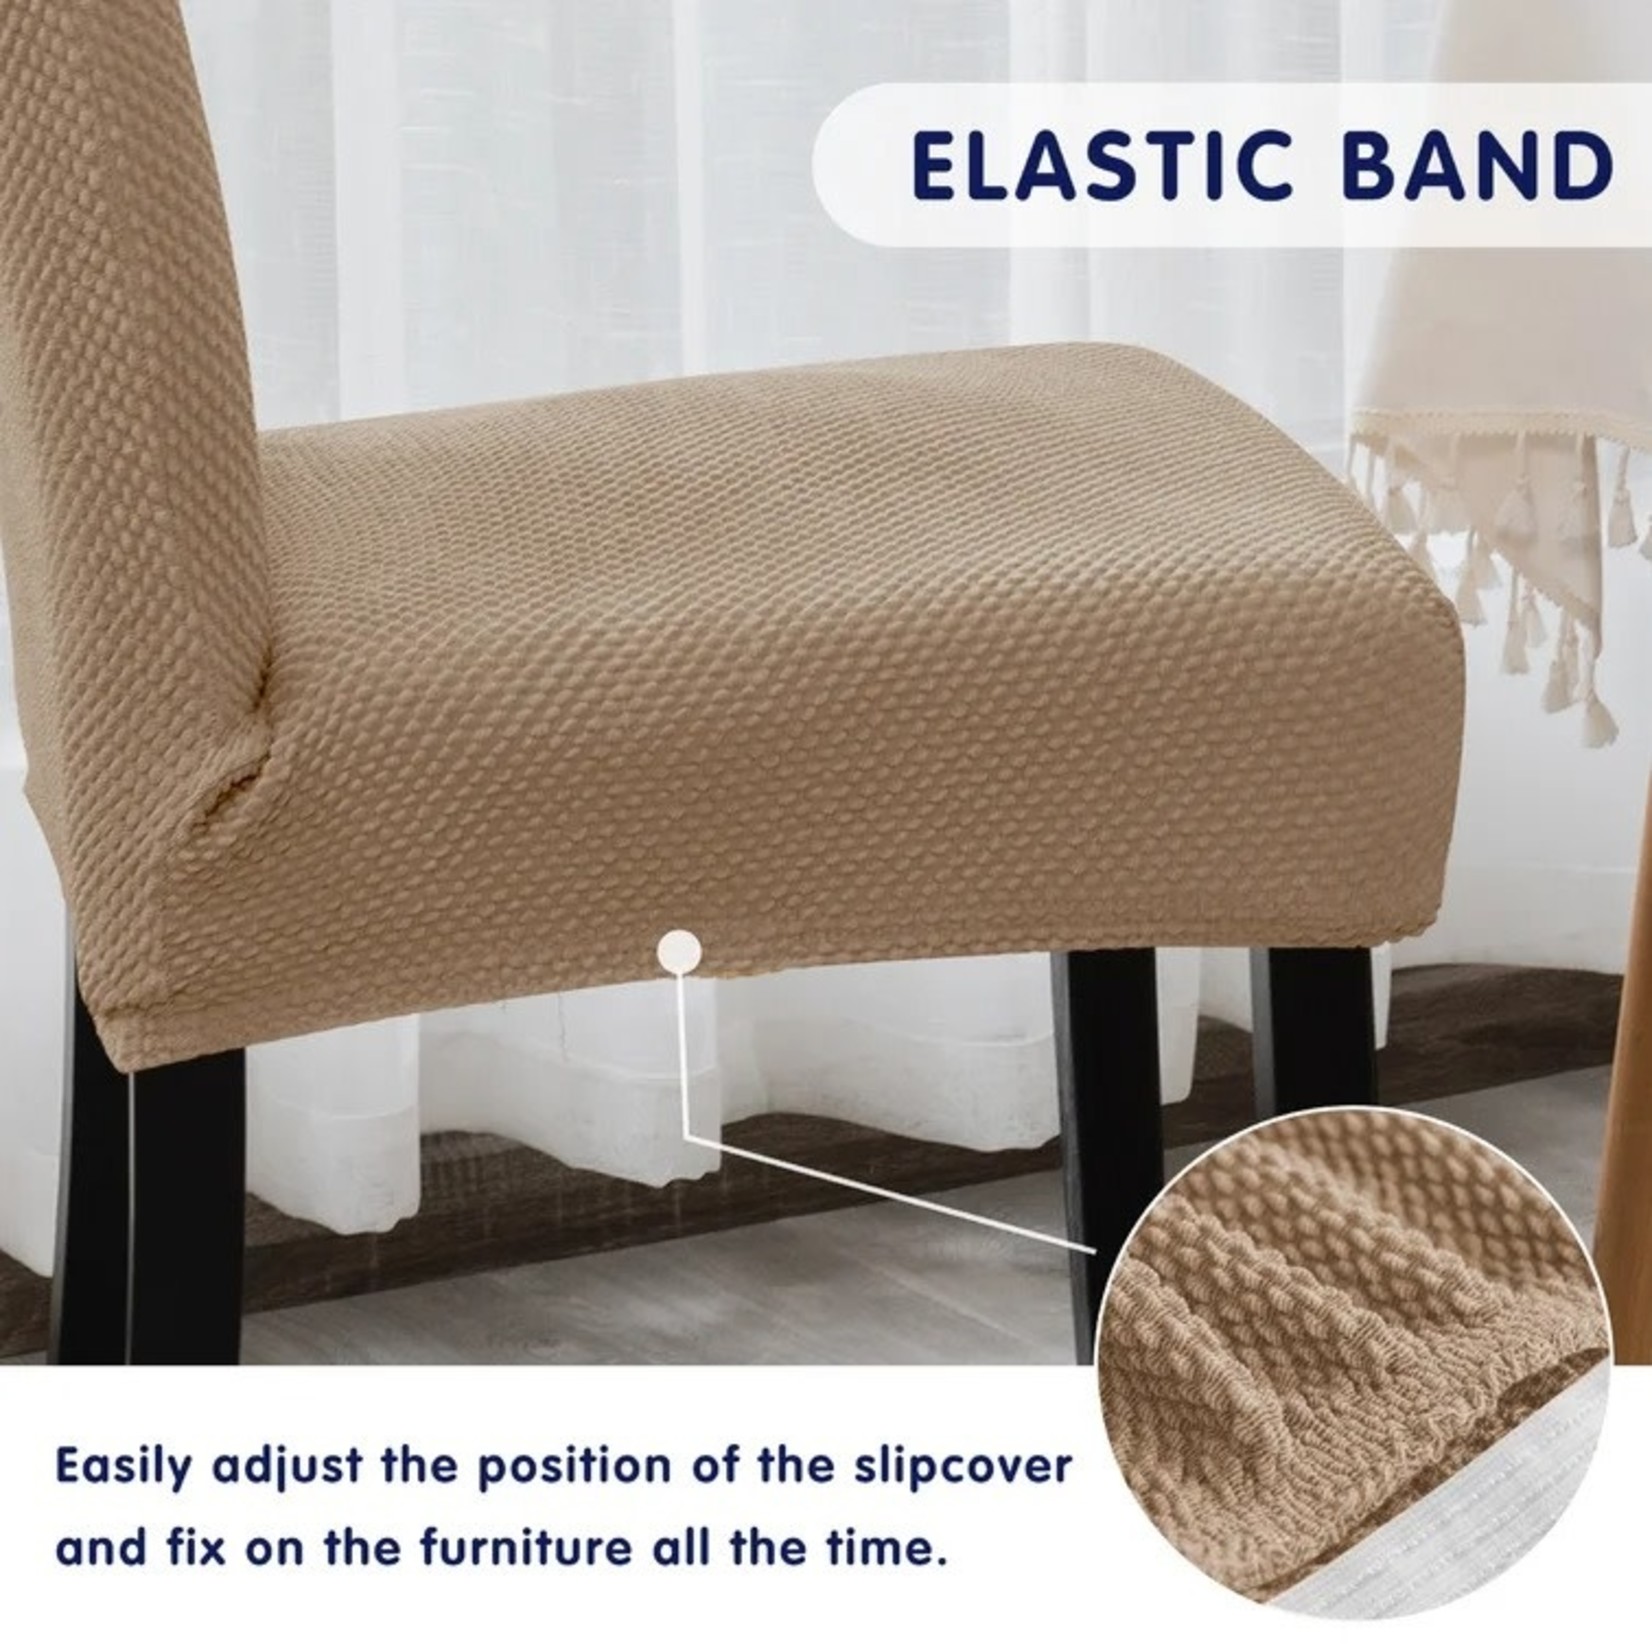 *Stretch Raised Dots Box Cushion Dining Chair Slipcovers- Set of 4 - Khaki